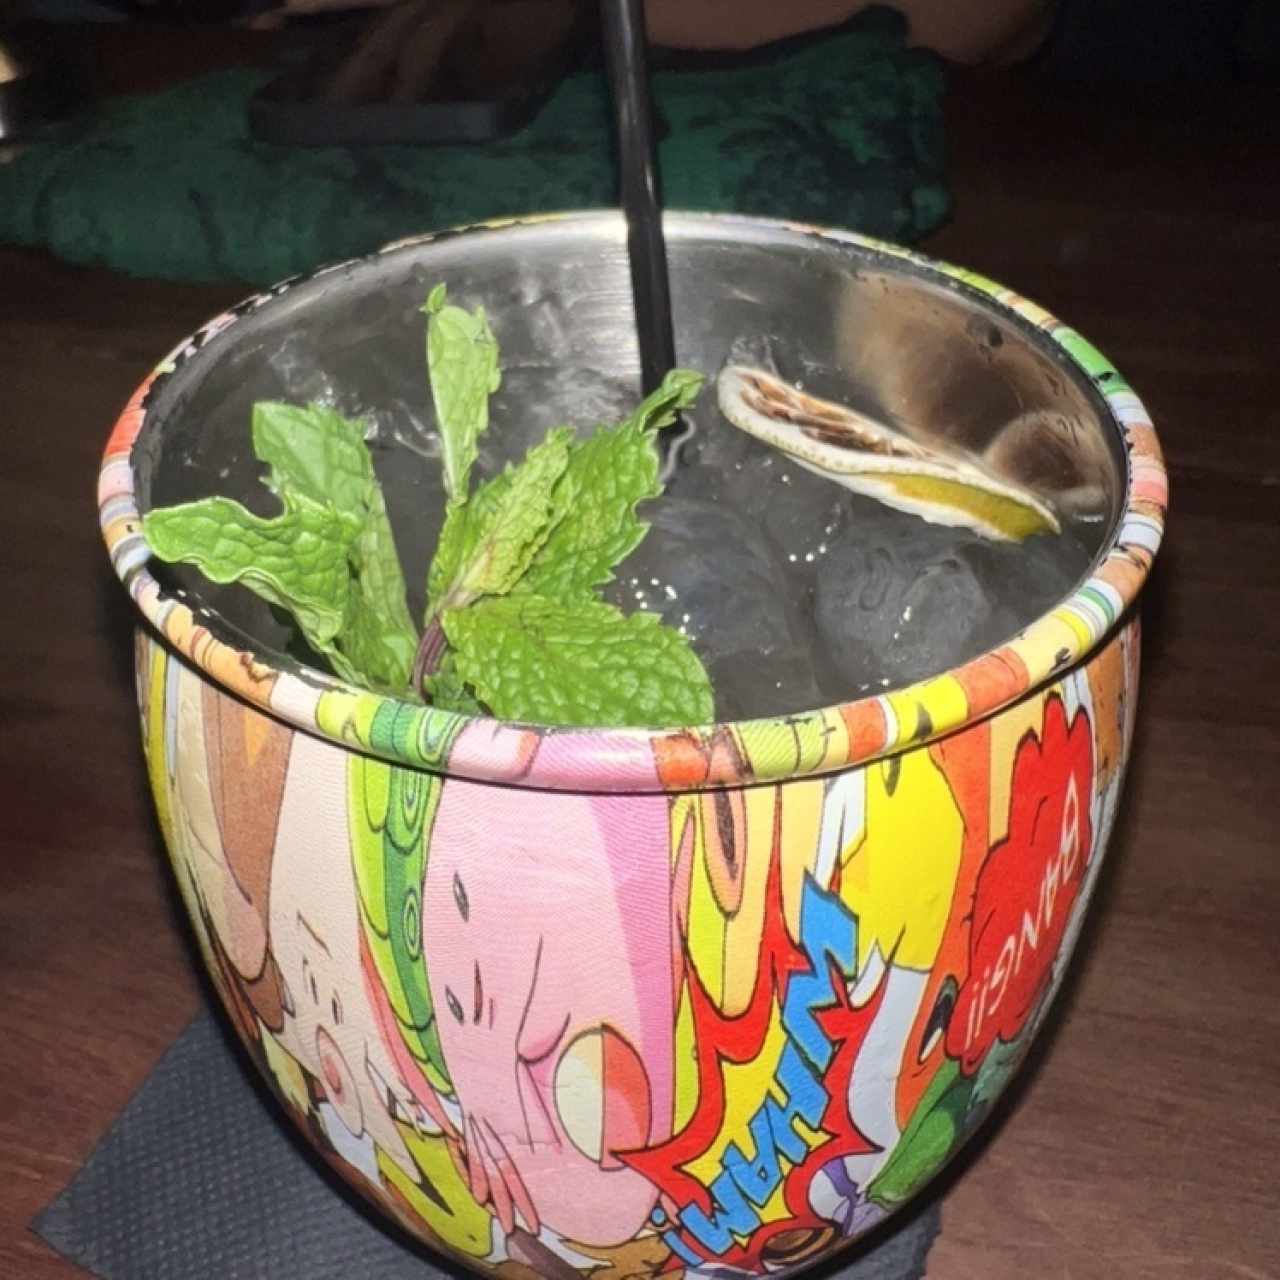 Mango Mule cocktail